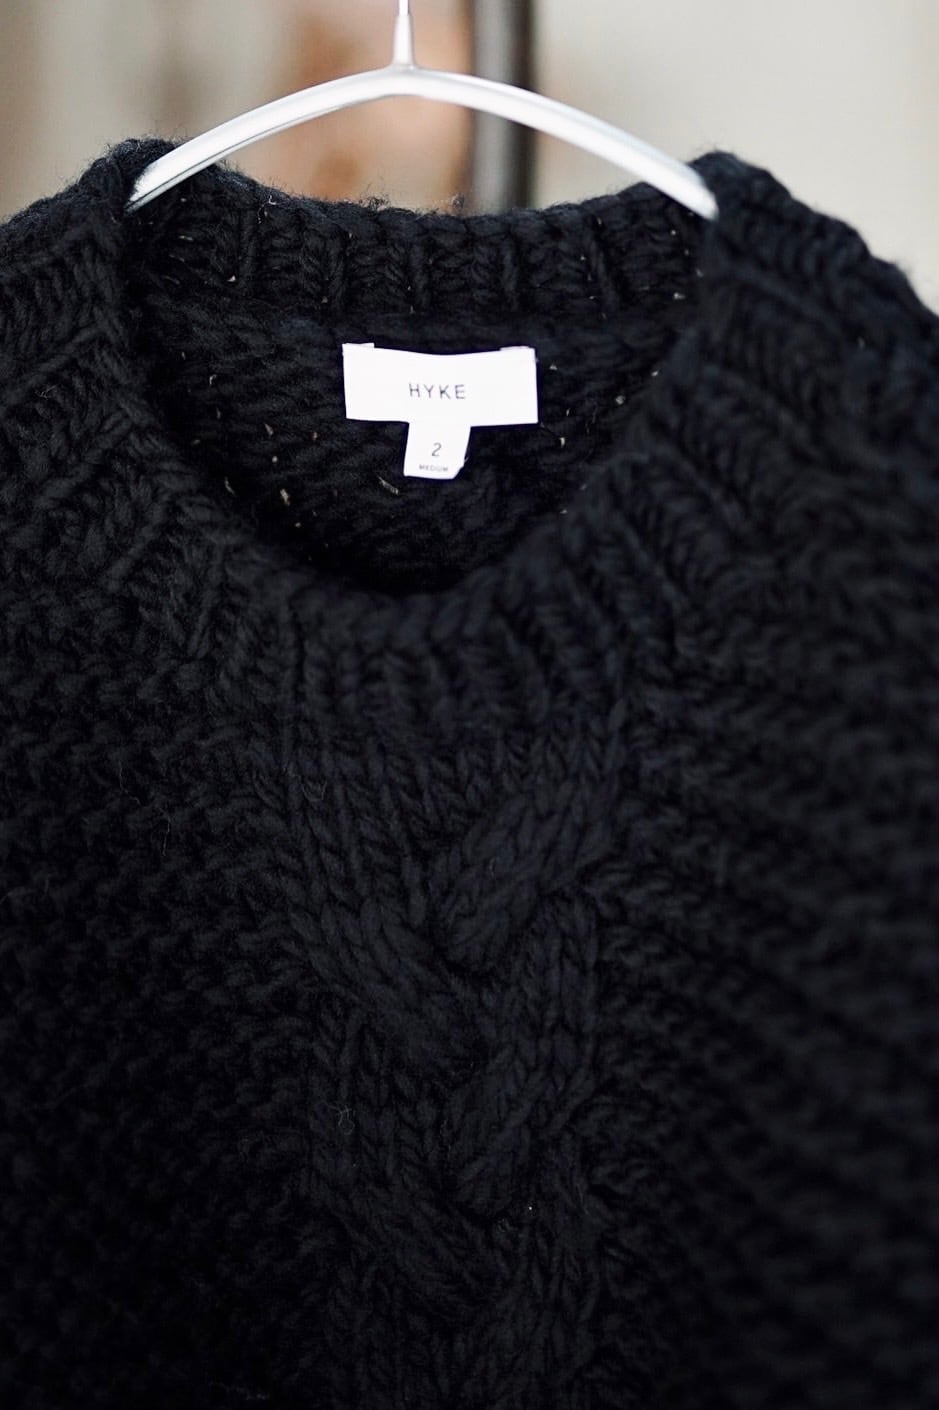 HYKE printed knit